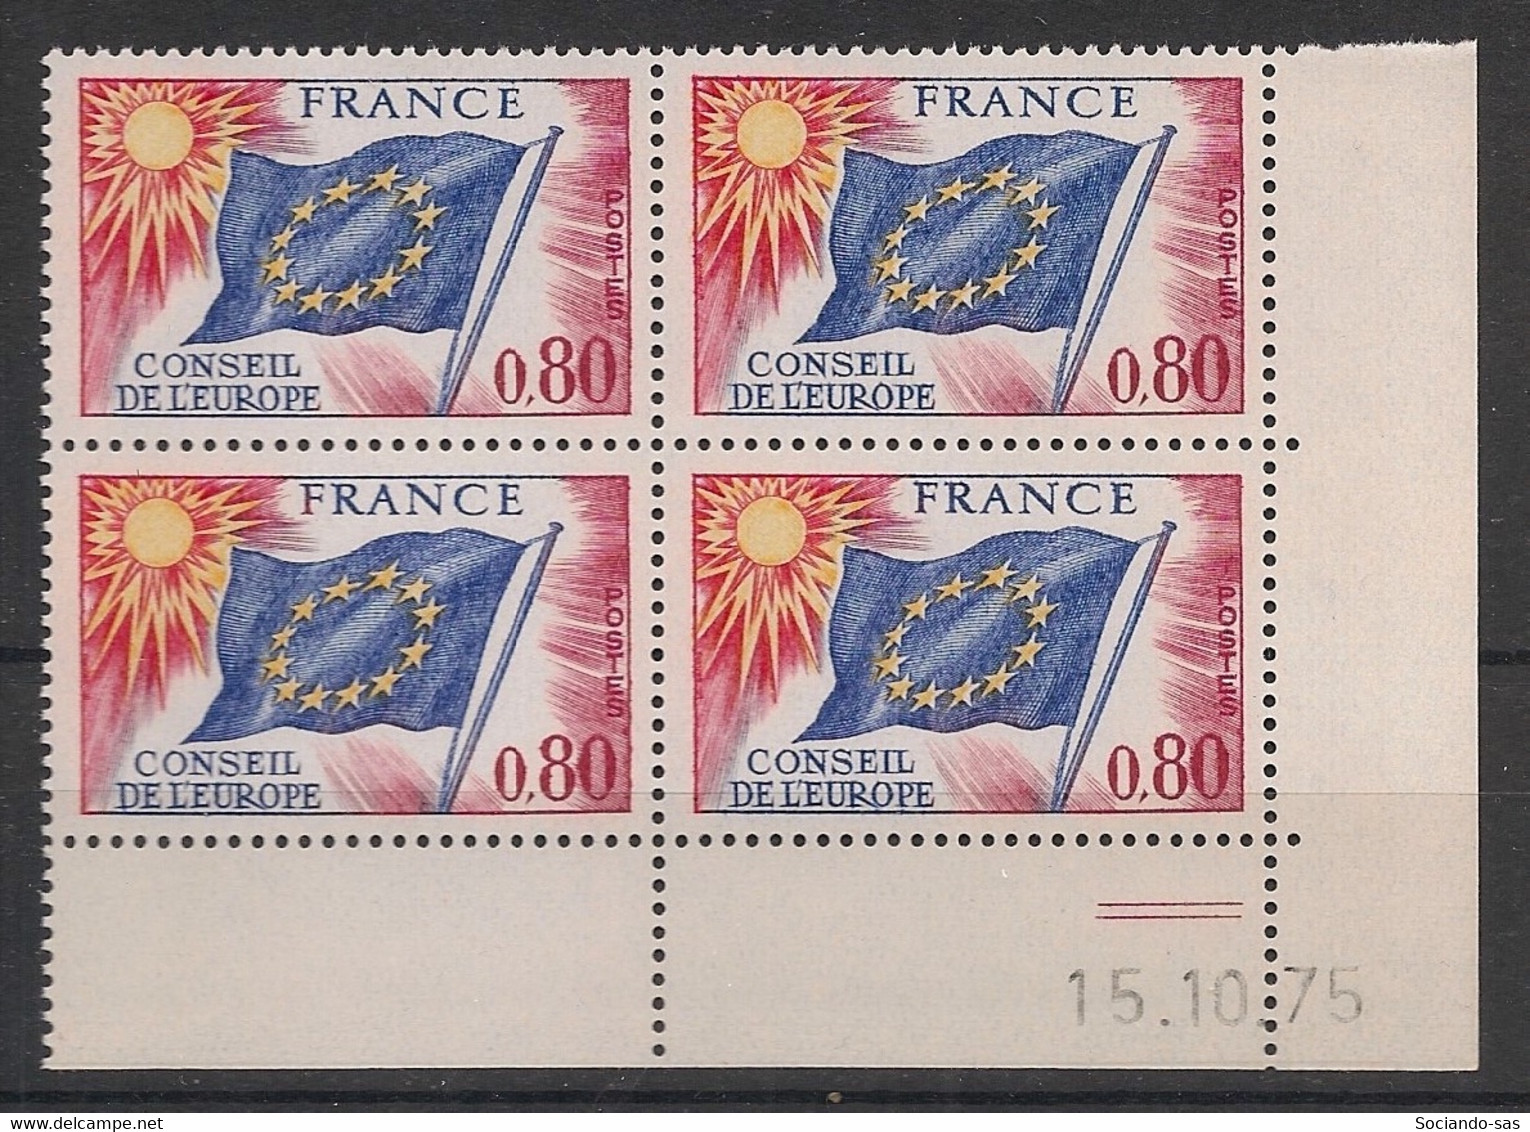 France - 1975 - Service N°Yv. 47 - Bloc De 4 Coin Daté - Neuf Luxe ** / MNH / Postfrisch - Dienstmarken